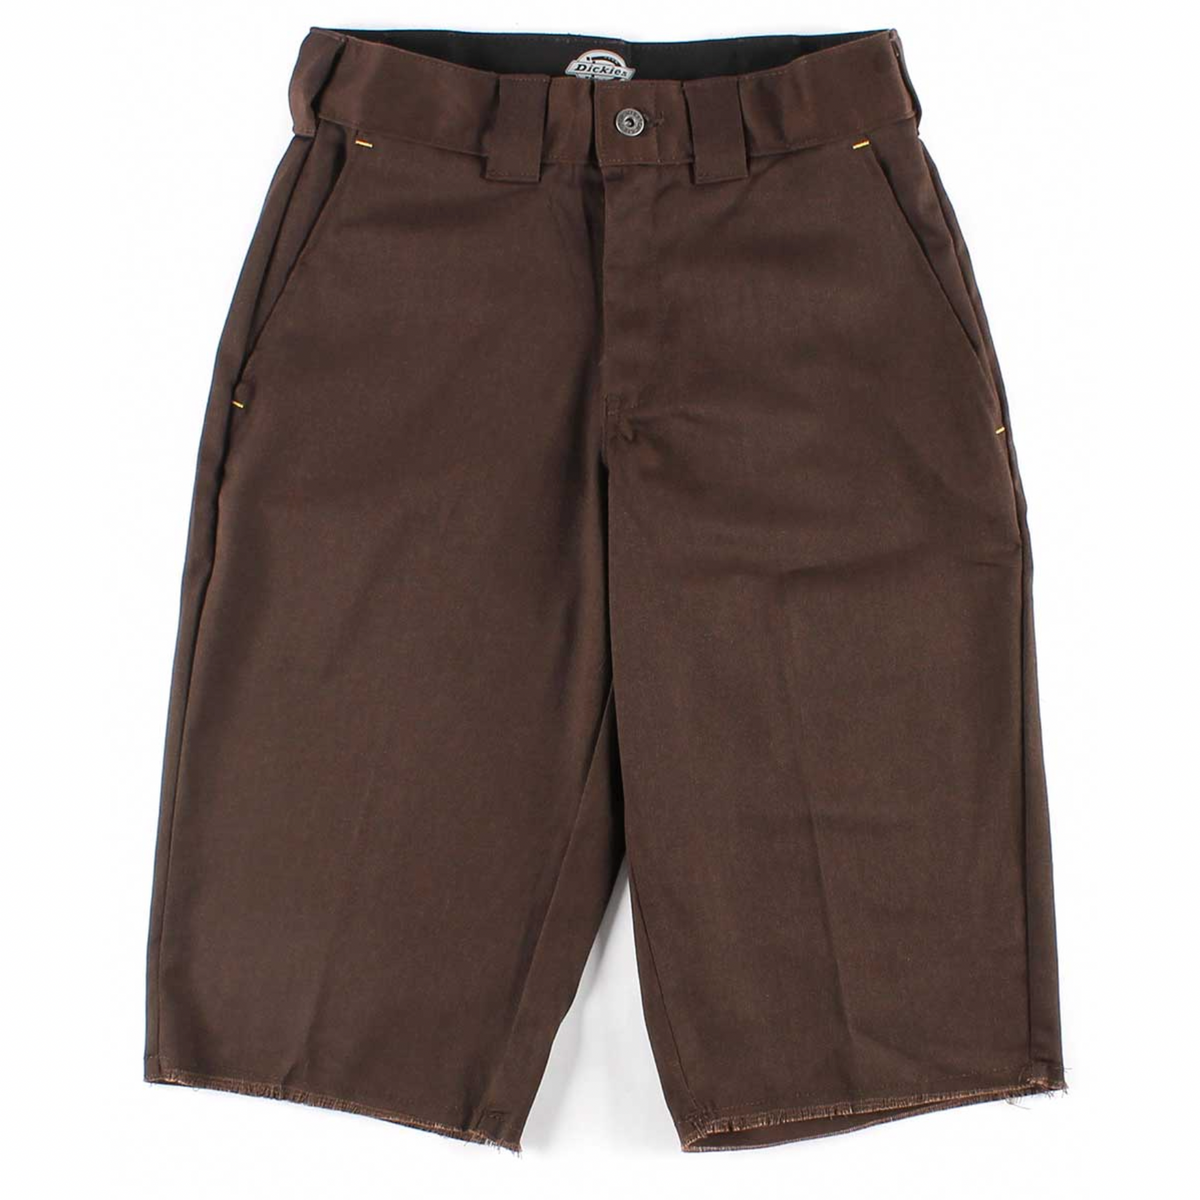 Cotton Crossover Shorts 603, Dark Chocolate Brown